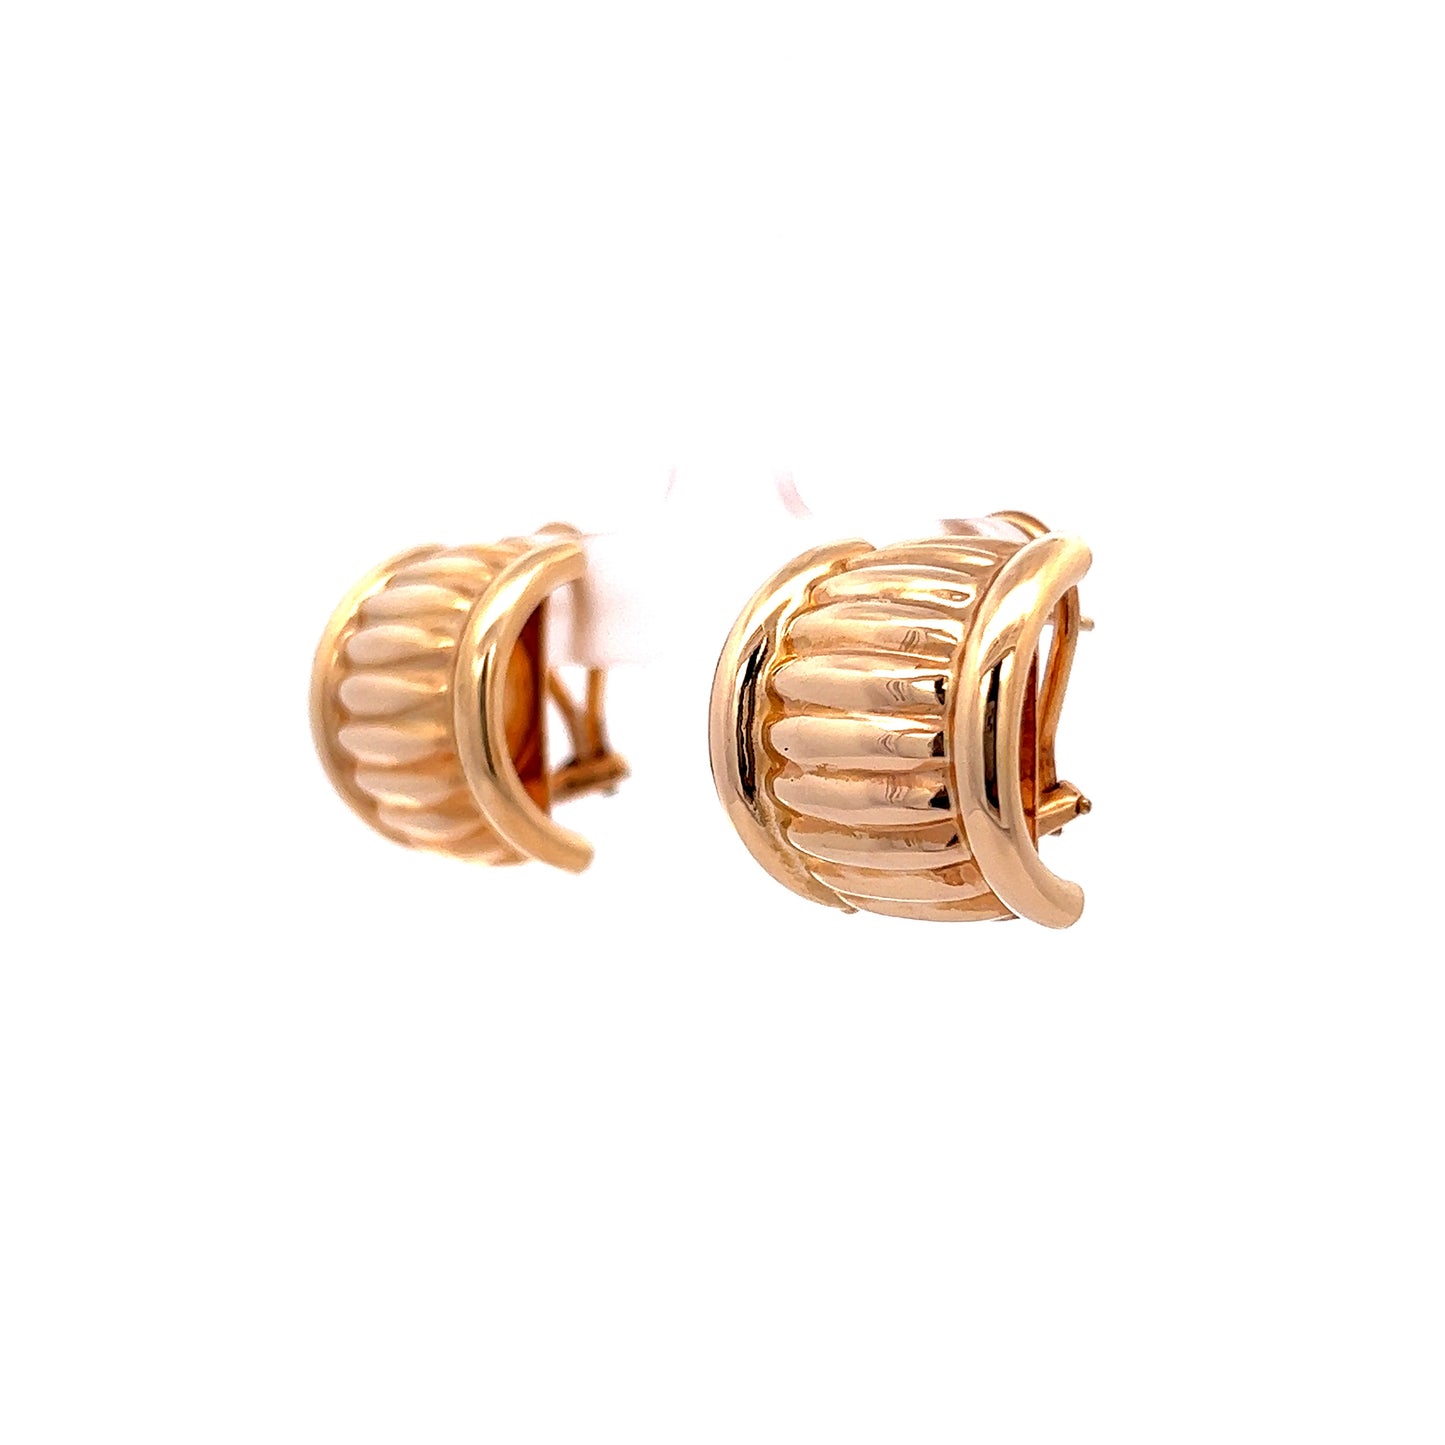 Textured Hoop Earrings in 14k Yellow Gold